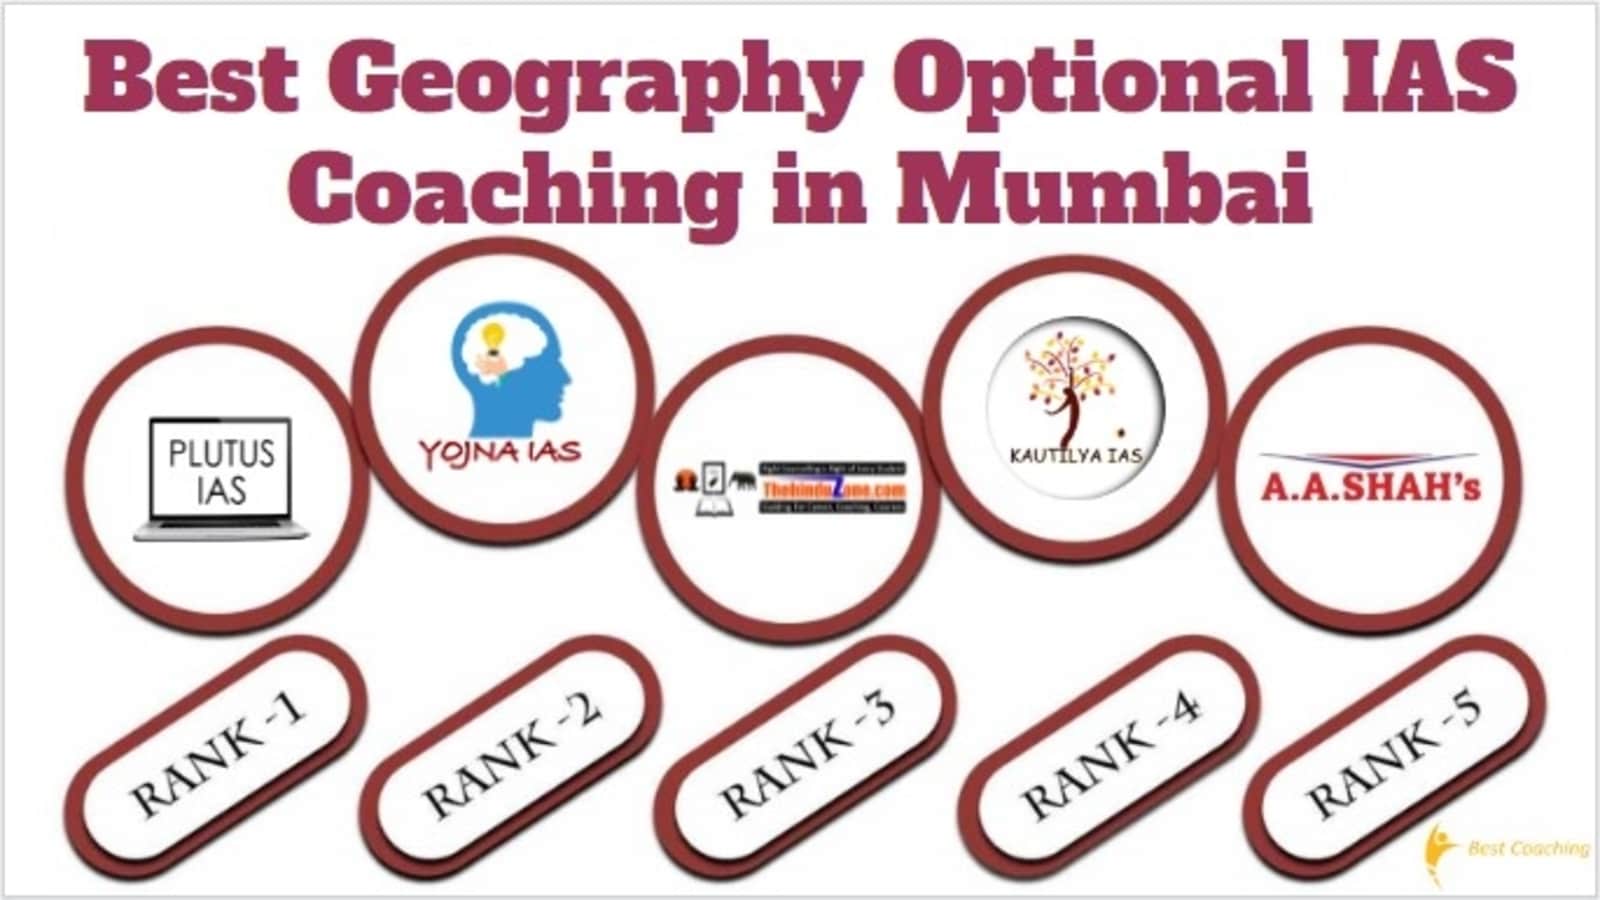 Best Geography Optional IAS Coaching in Mumbai